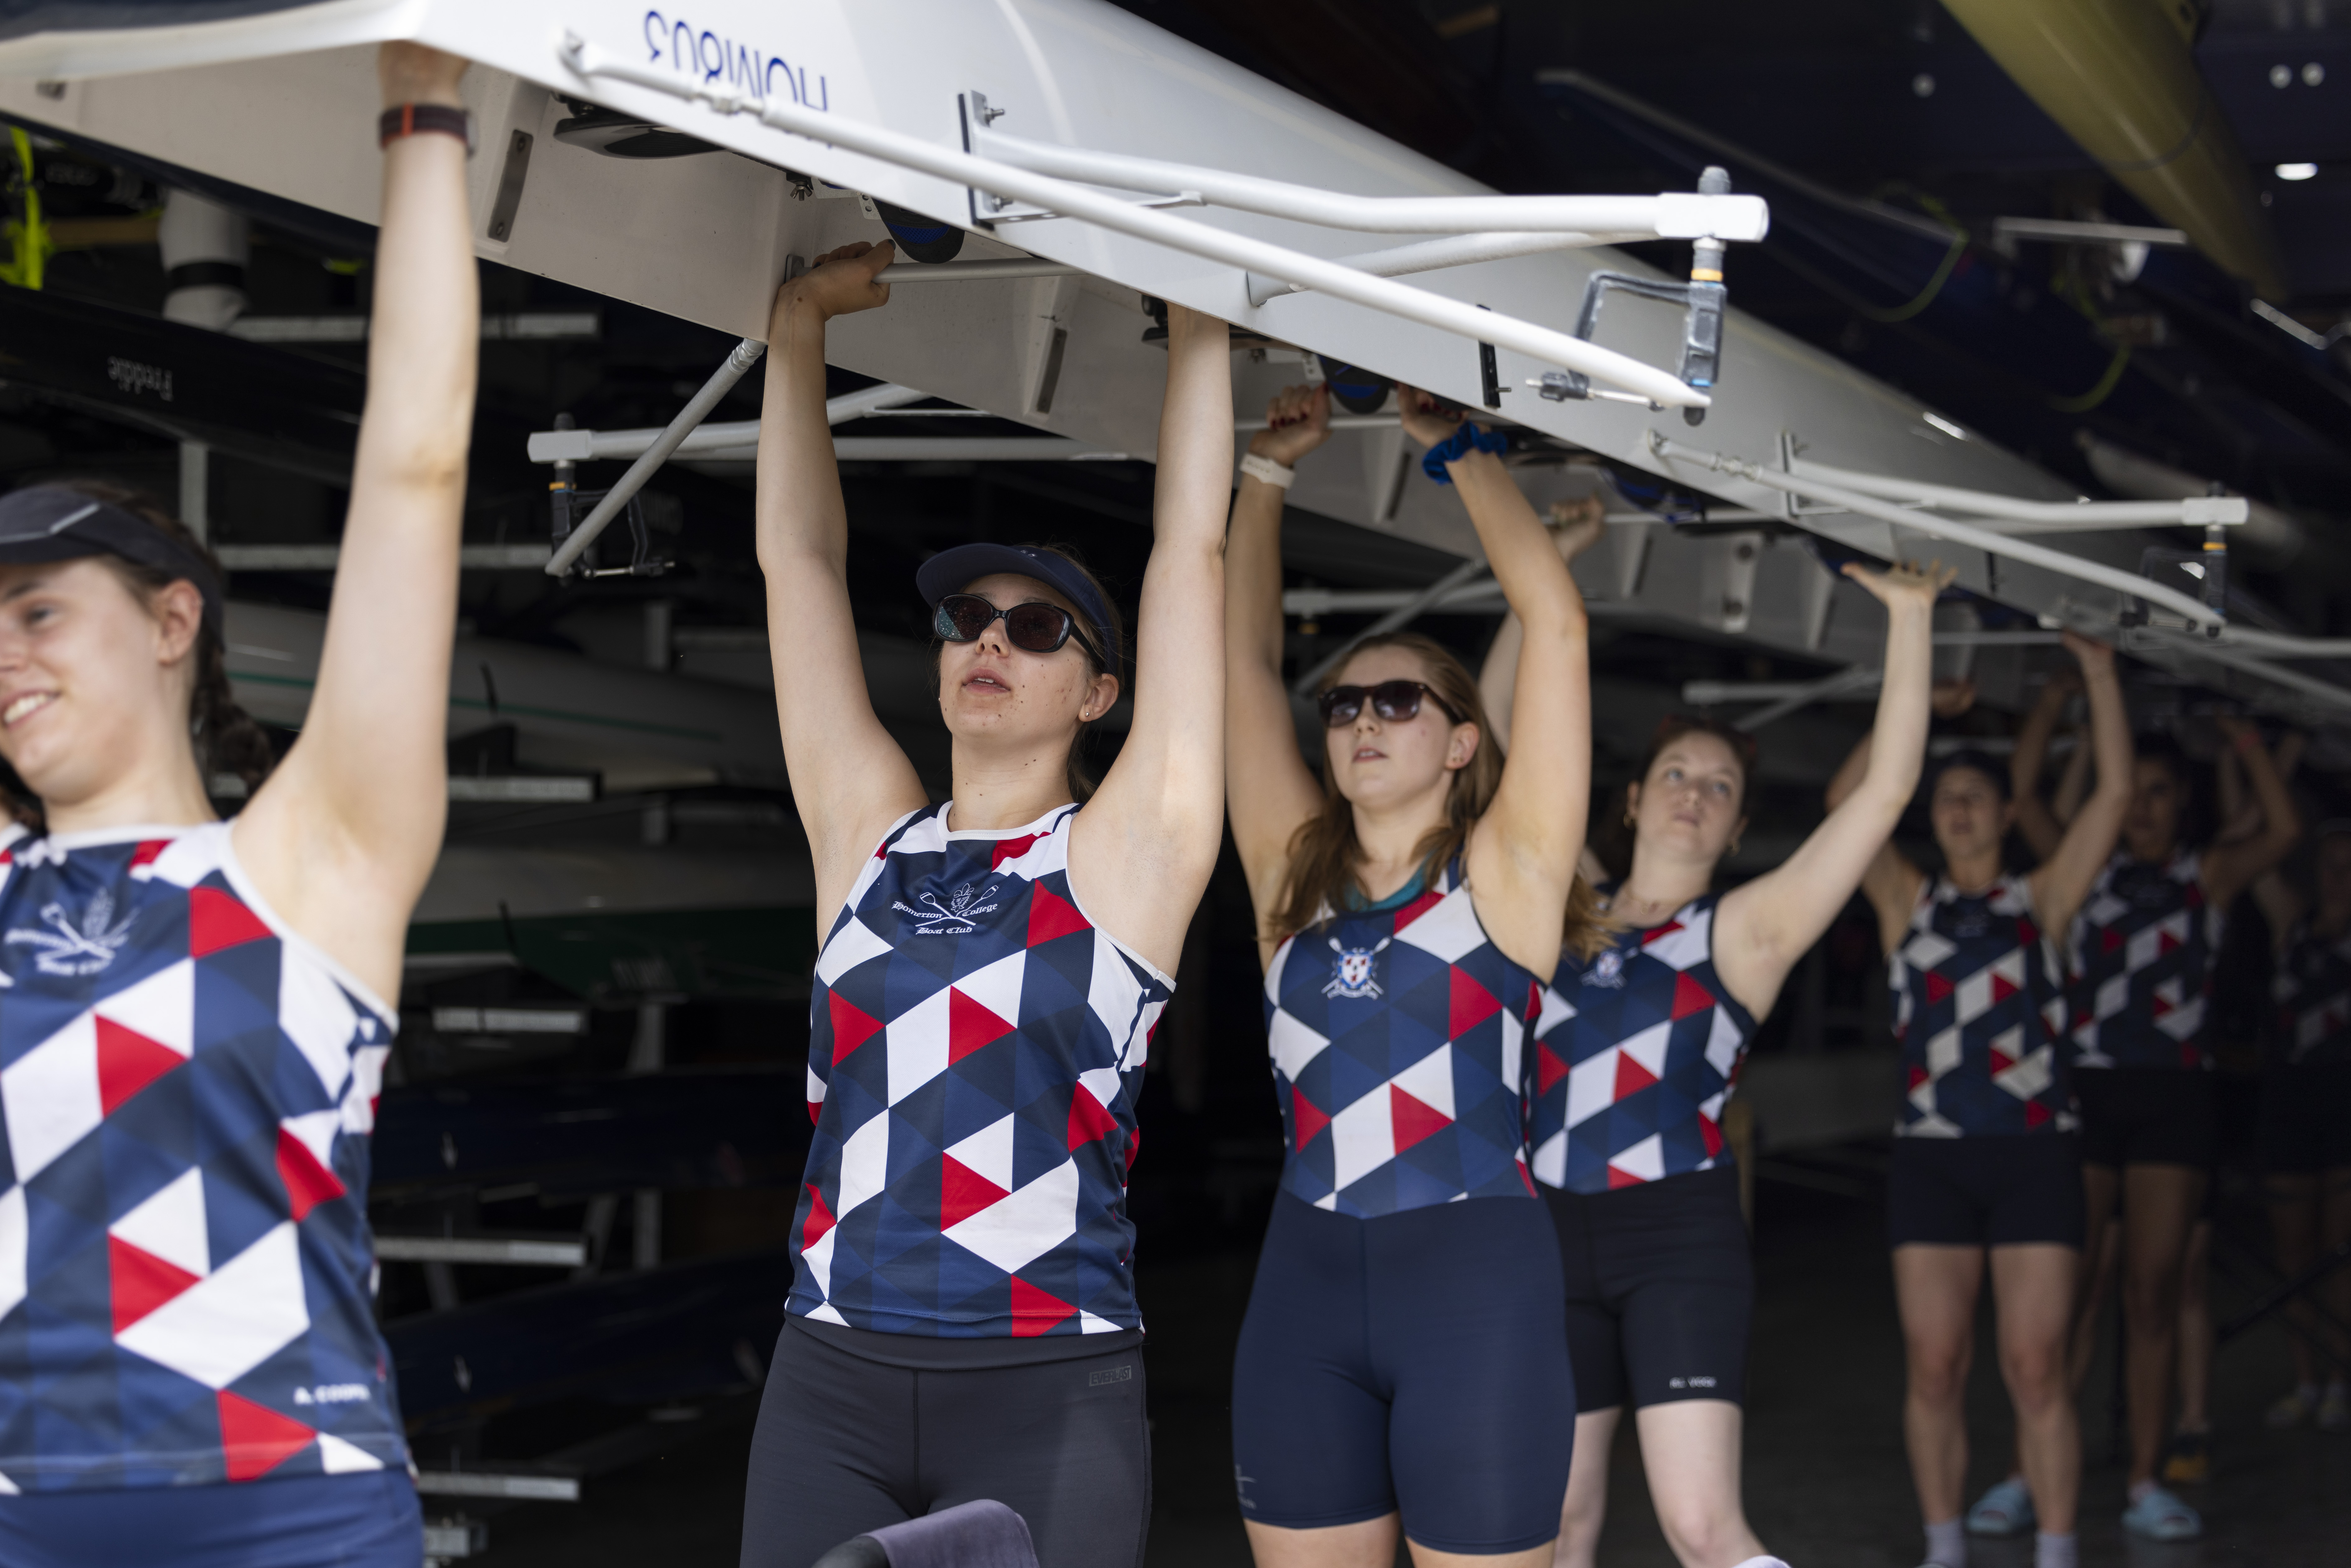 HCBC Women's rowing team